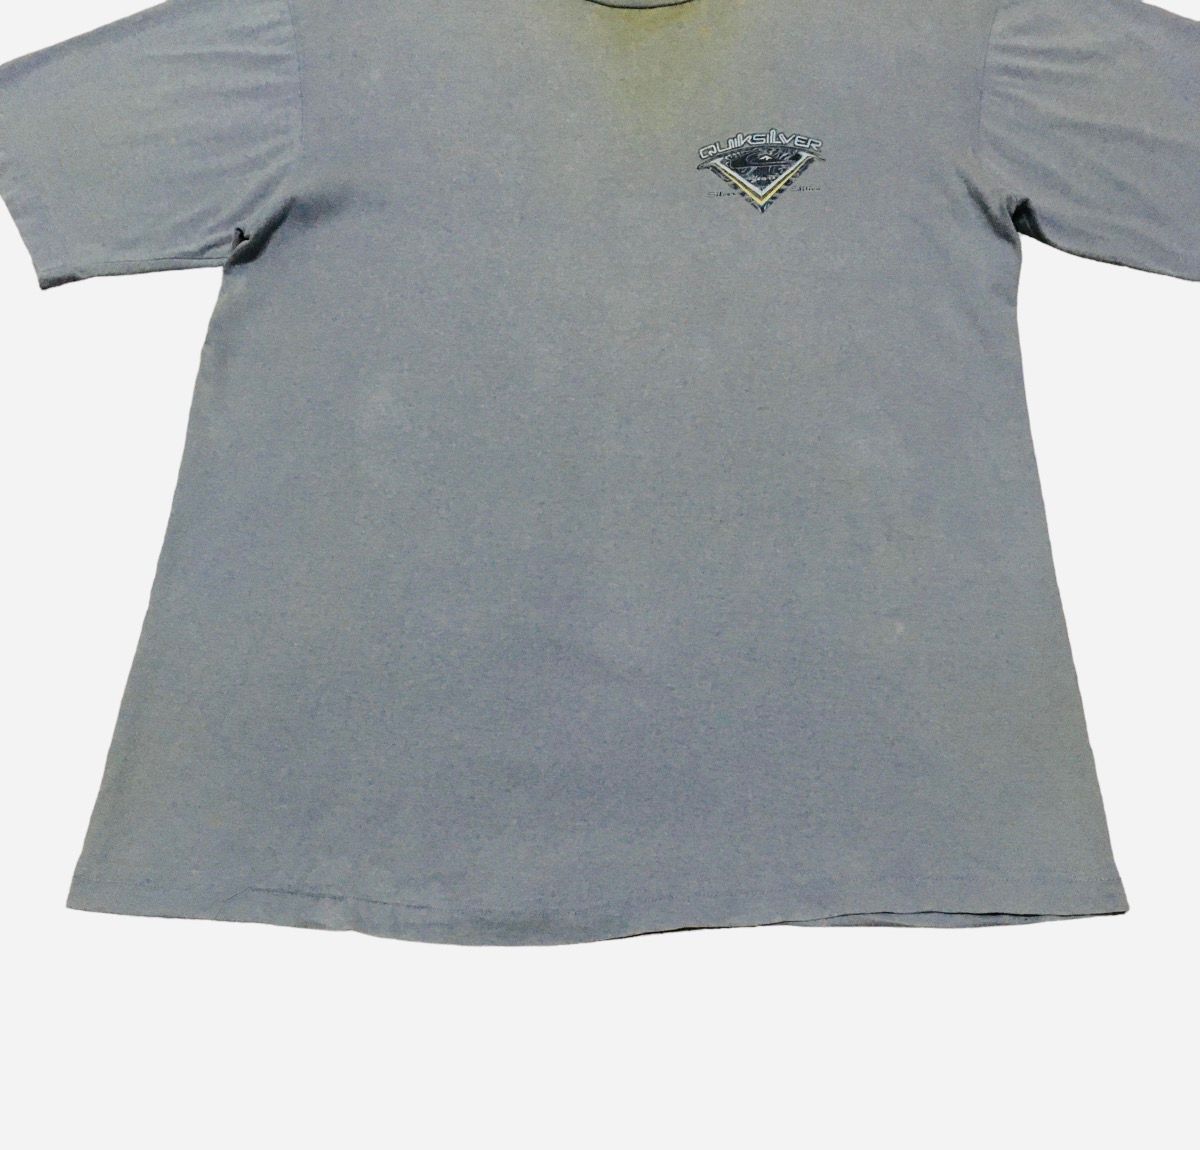 Vintage Rare Design Vintage Quiksilver Made In Usa T-shirt 1990s Size US XL / EU 56 / 4 - 3 Thumbnail